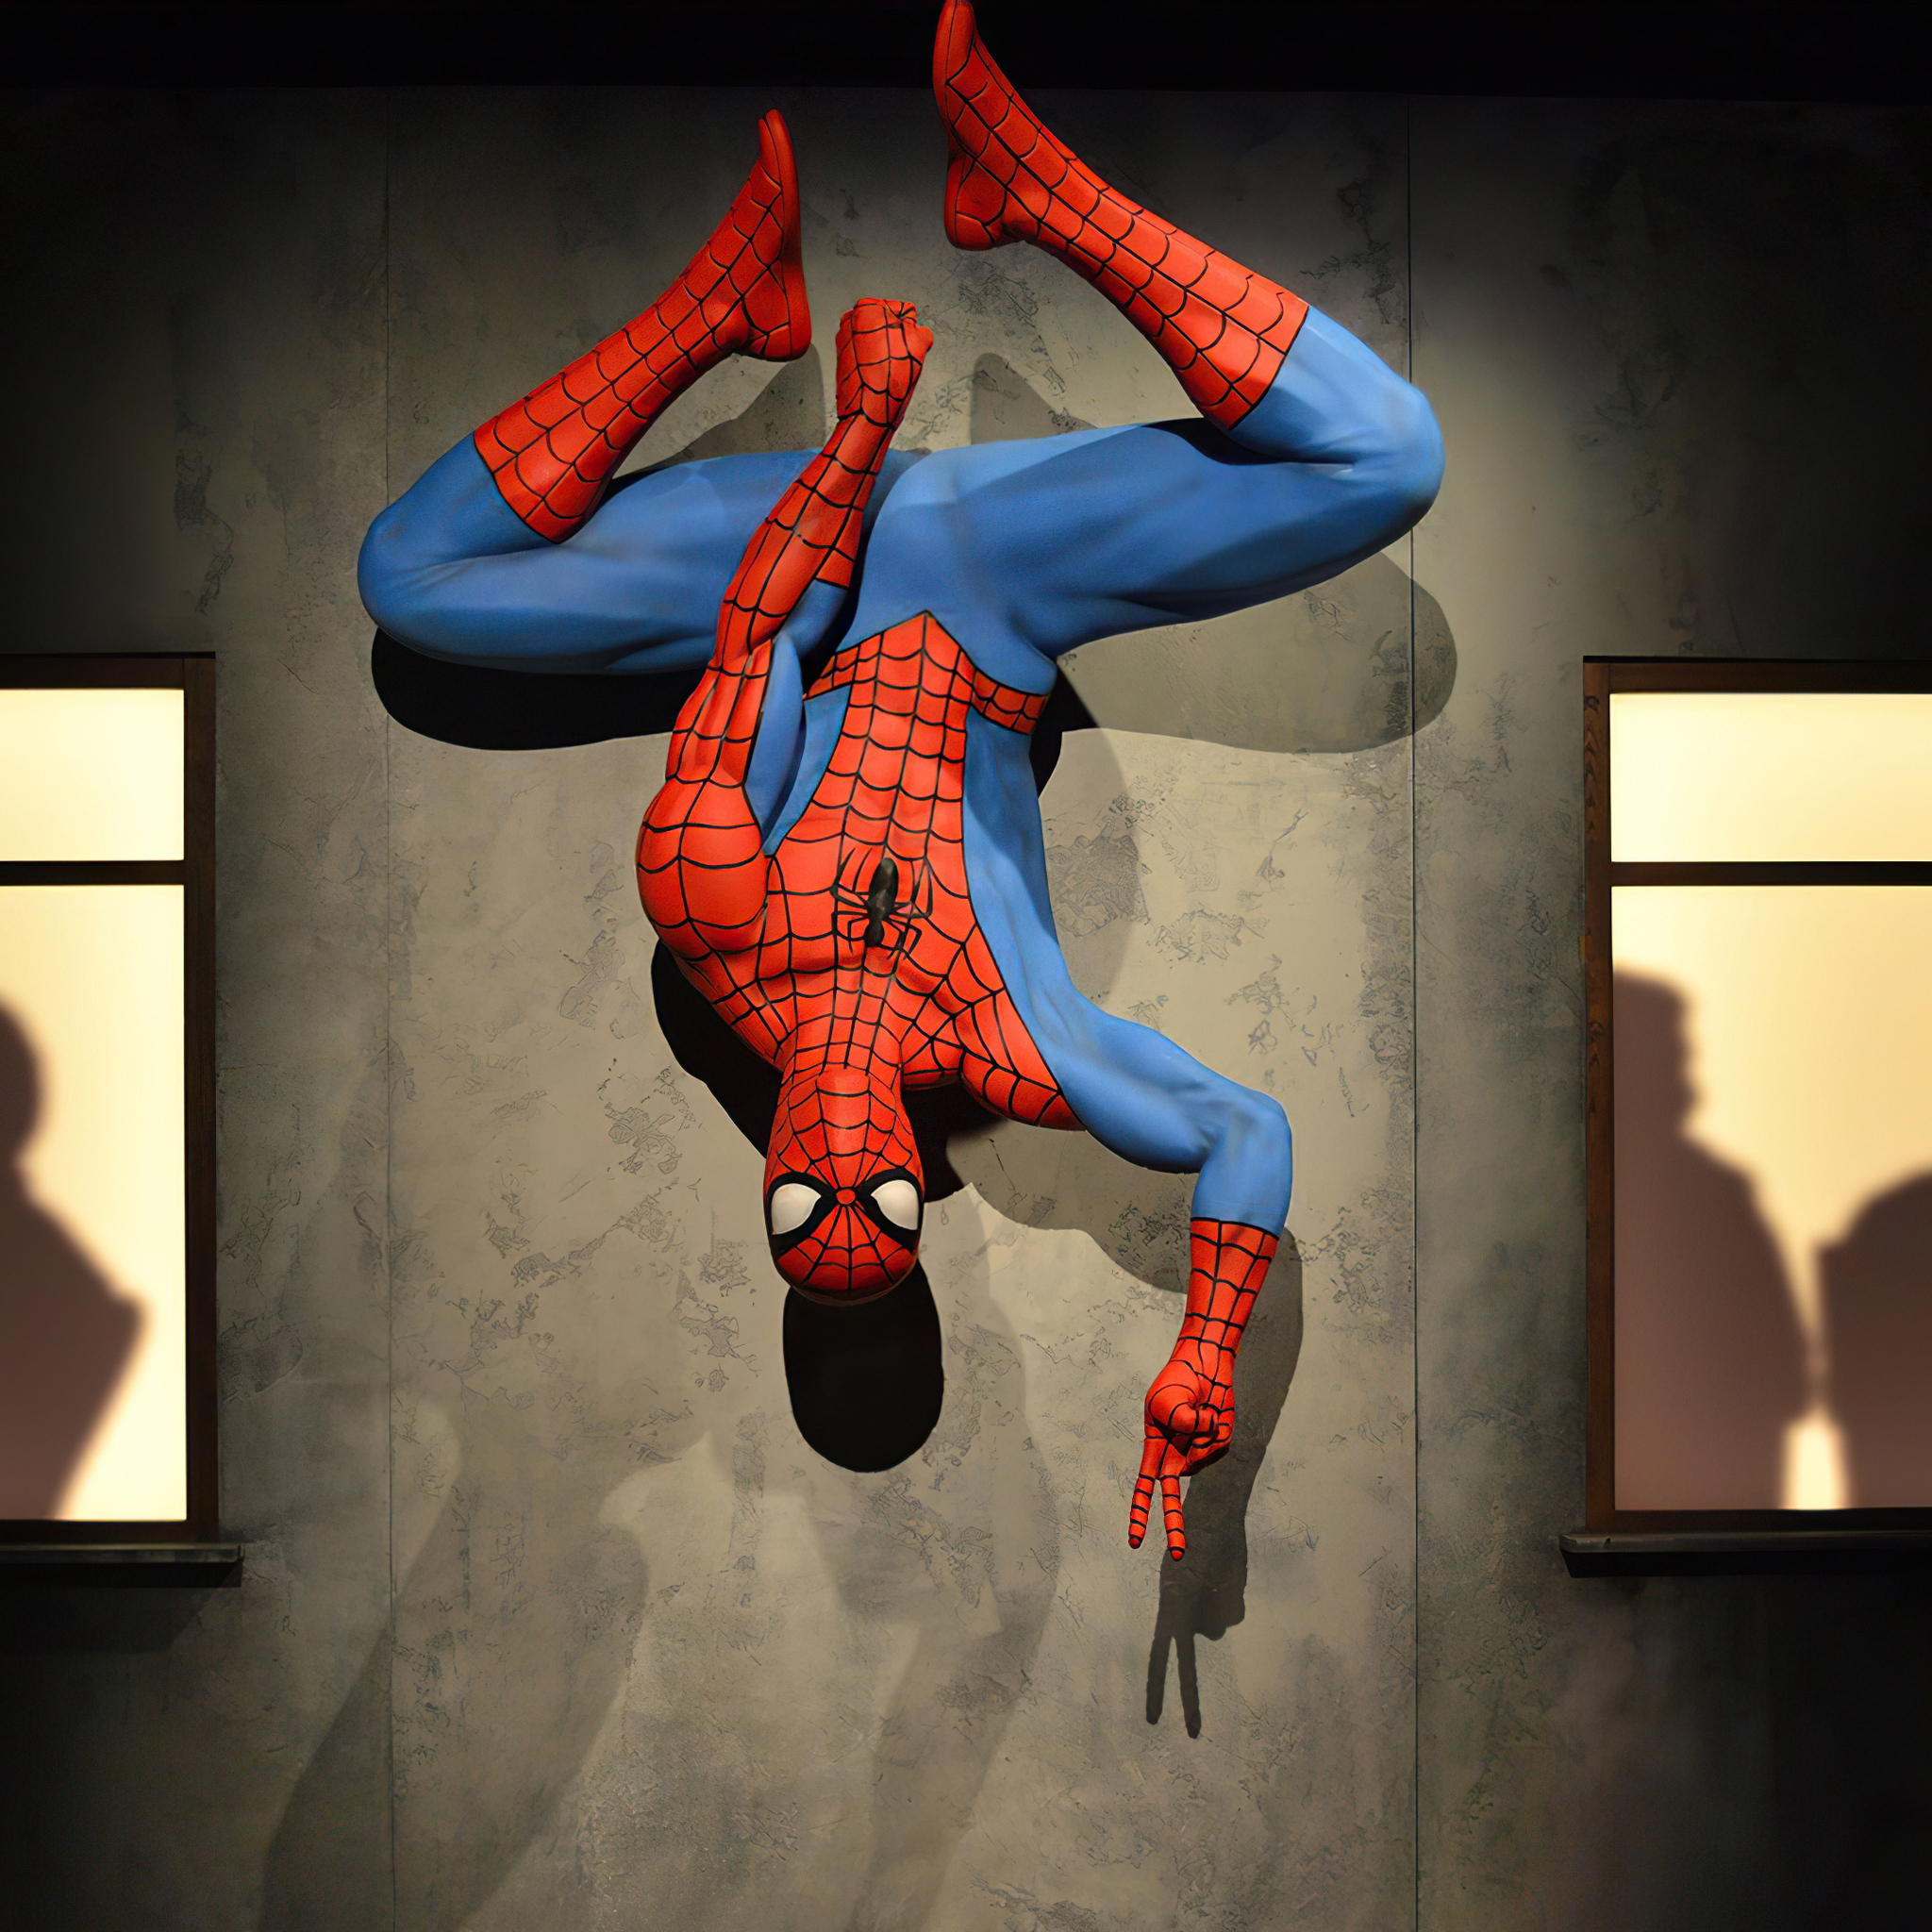 Spiderman Hanging In 2048x2048 Resolution. spiderman-hanging-q8.jpg. 